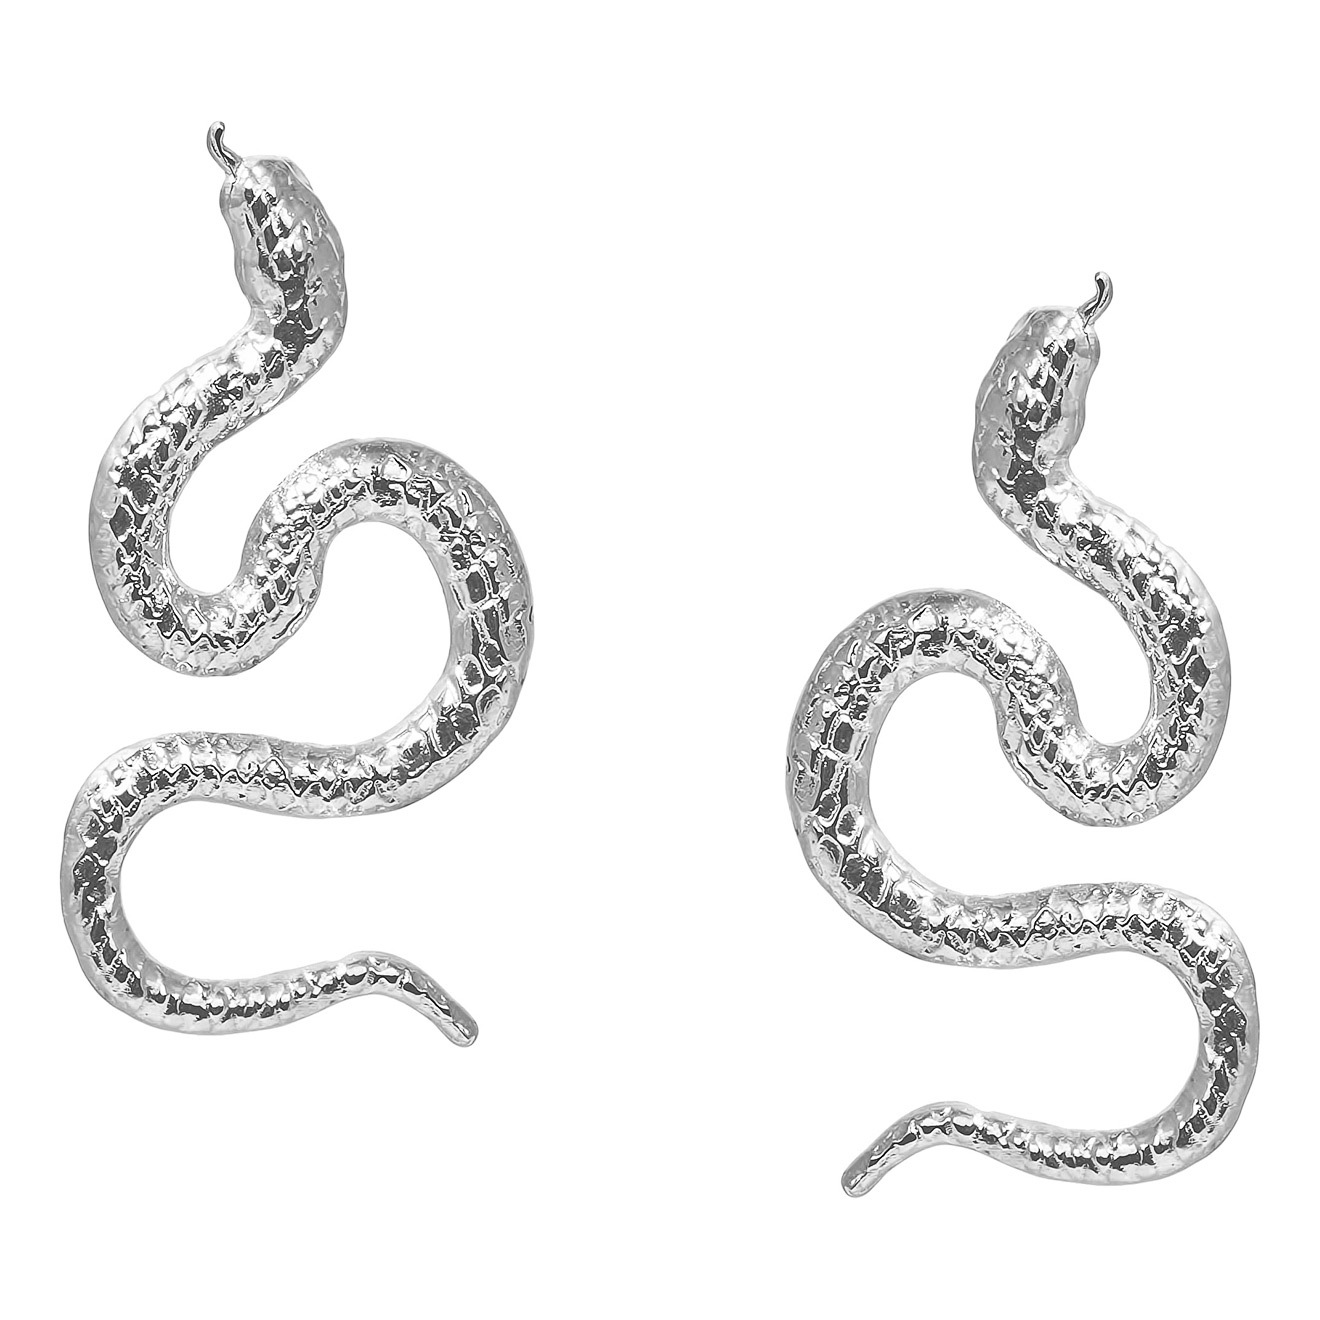 Natia x Lako Покрытые серебром серьги-змеи цена и фото